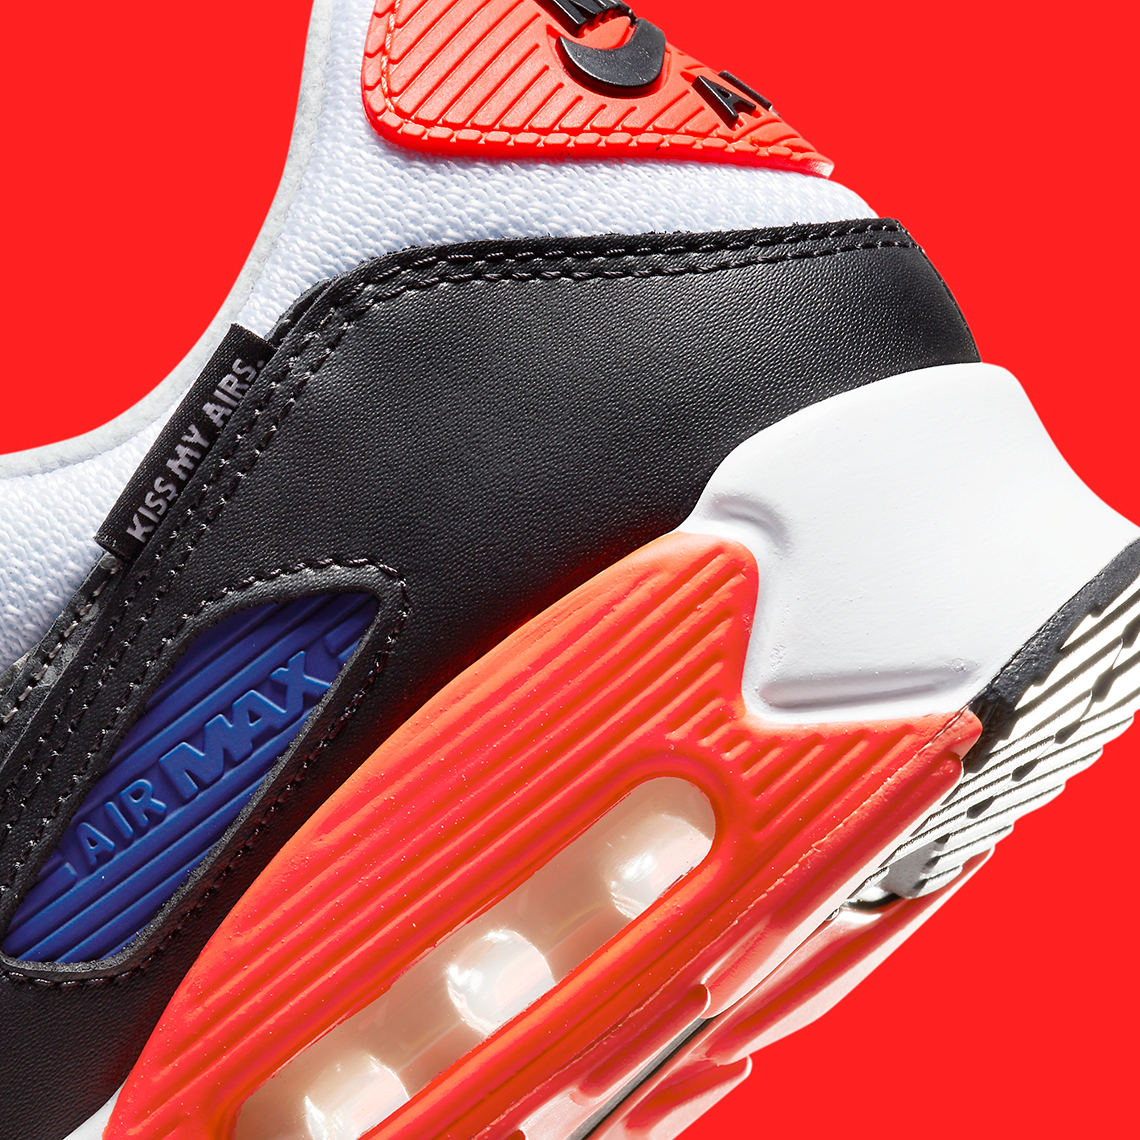 Safari Print And Infrared Hues Decorate The Nike Air Max 90 